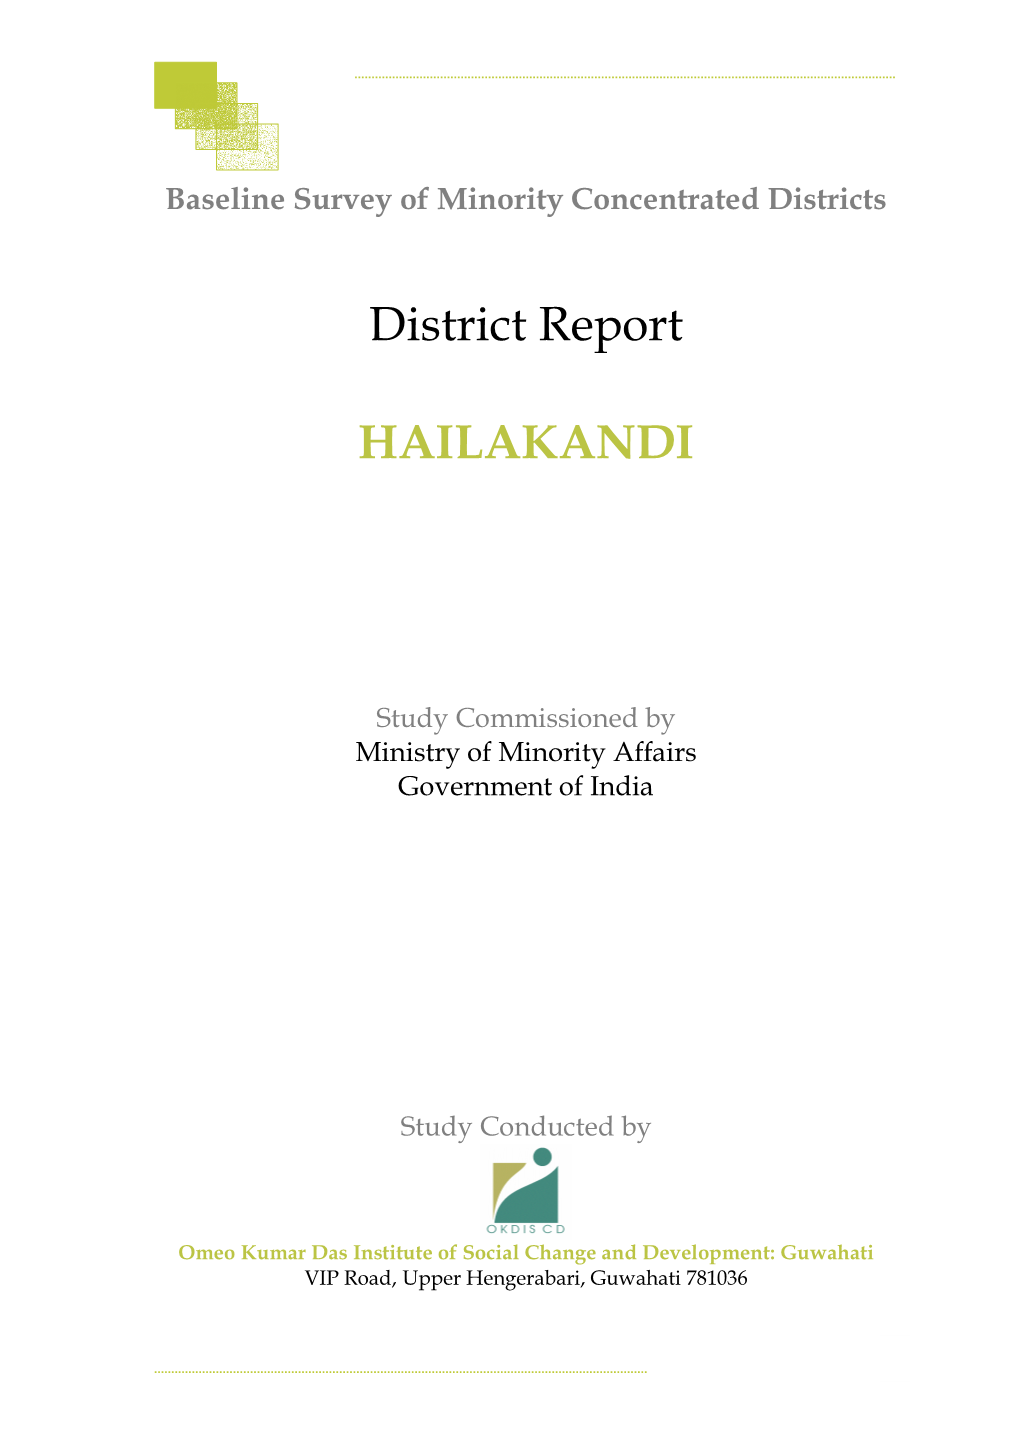 District Report HAILAKANDI